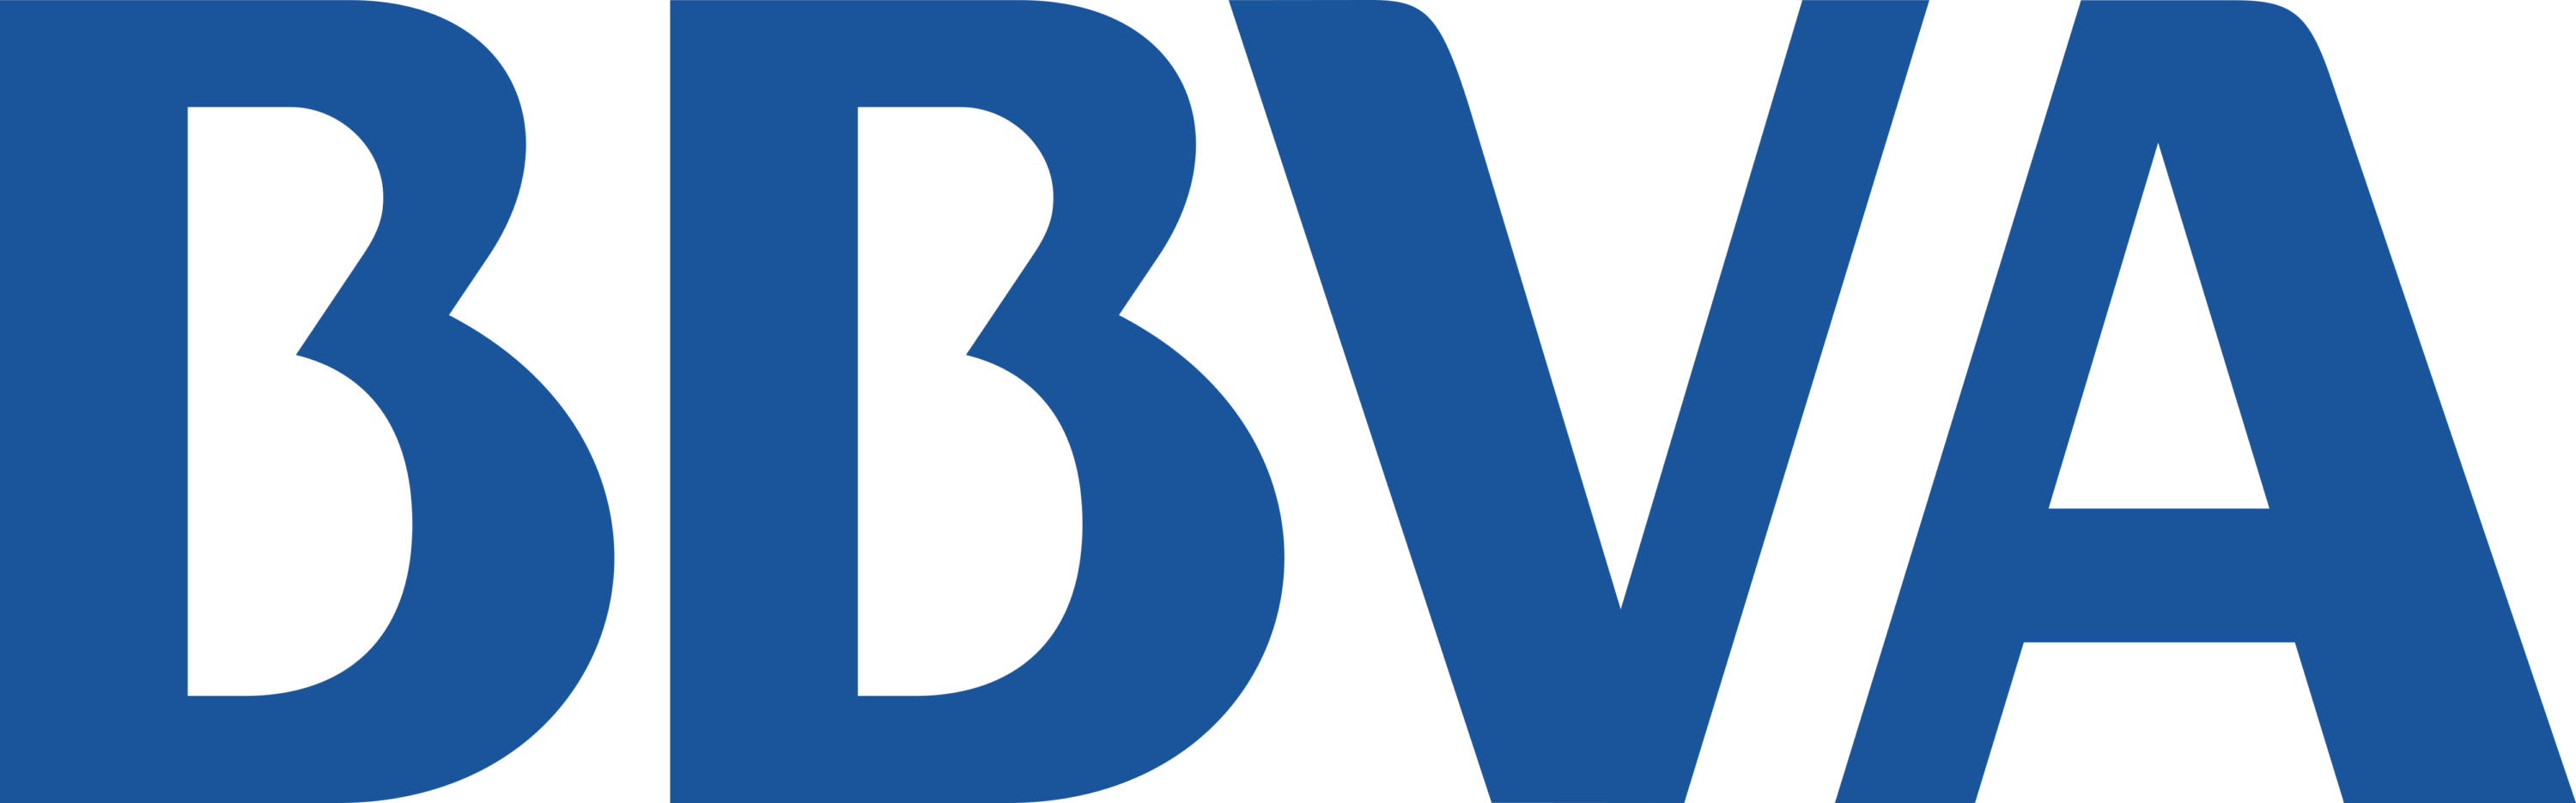 BBVA Logo 2000